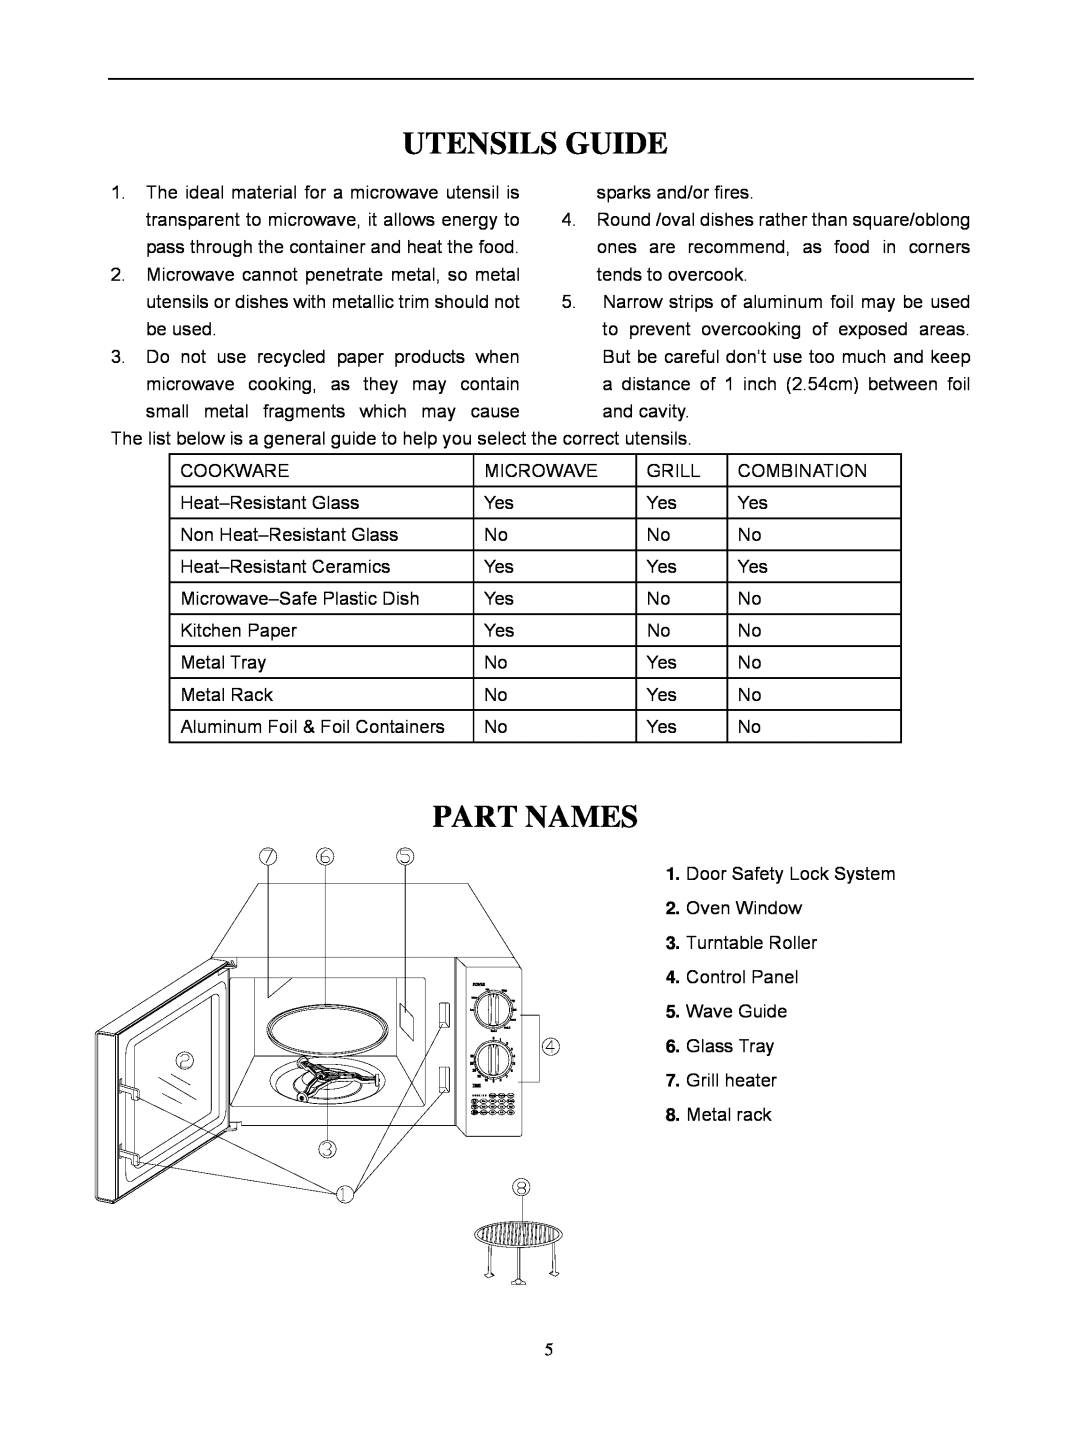 IFB Appliances 17PG1S owner manual Utensils Guide, Part Names 